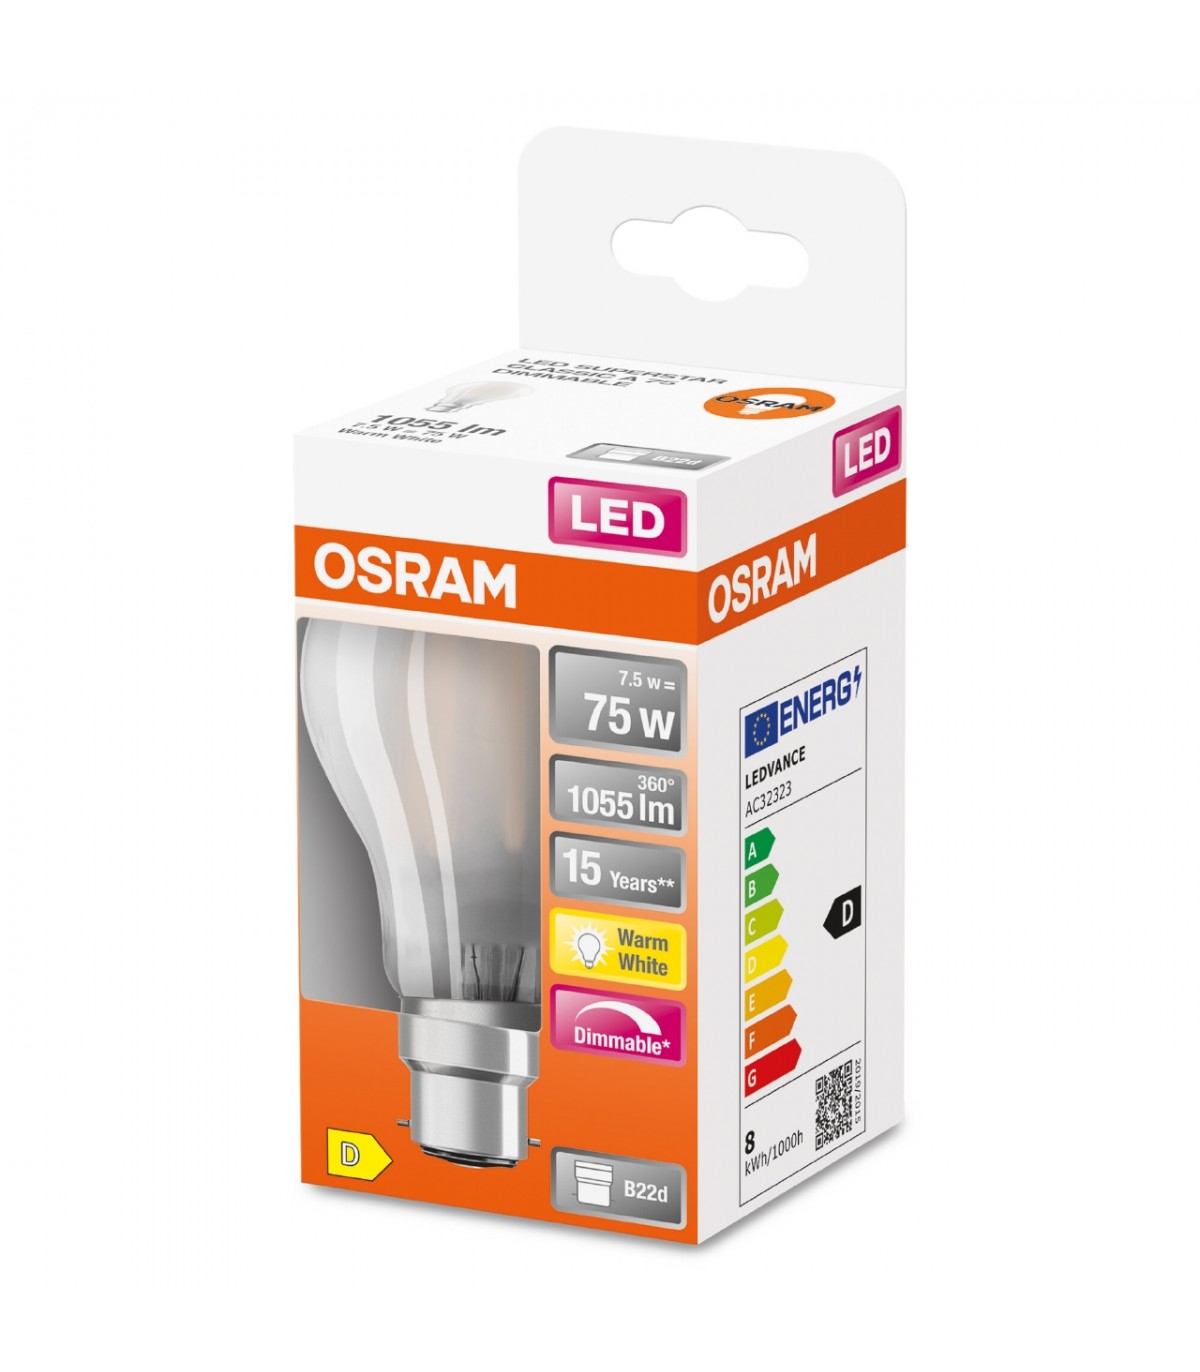 Ampoule LED Tungsram Standart A60 9w substitut 60w 850 lumens